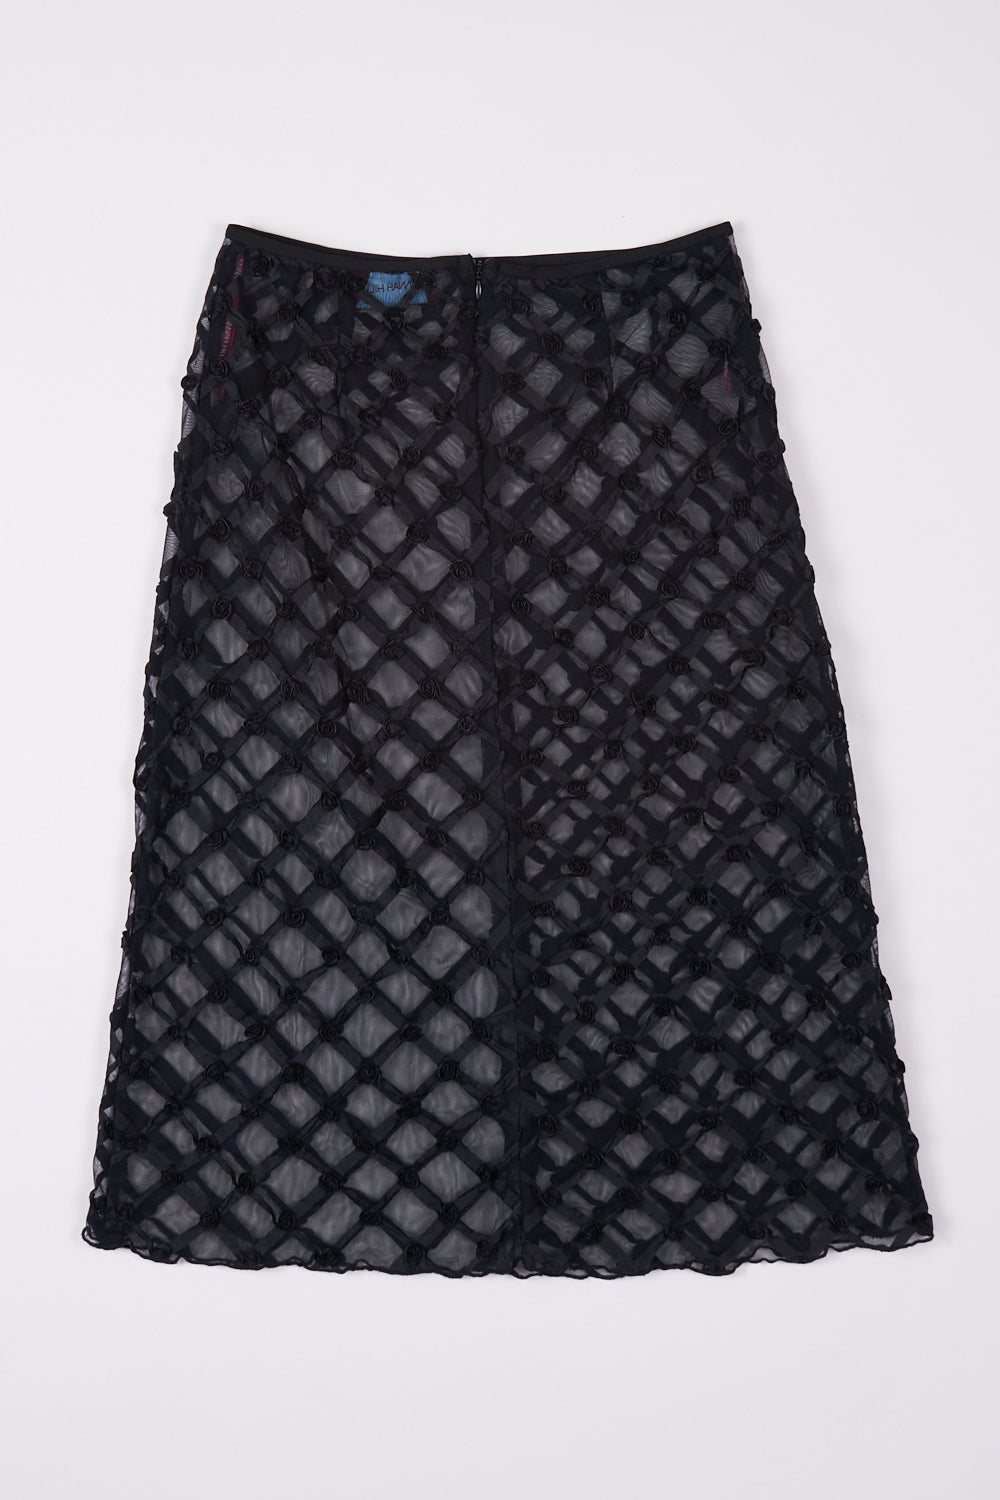 Alannah Hill Black Patterned Midi Skirt 12